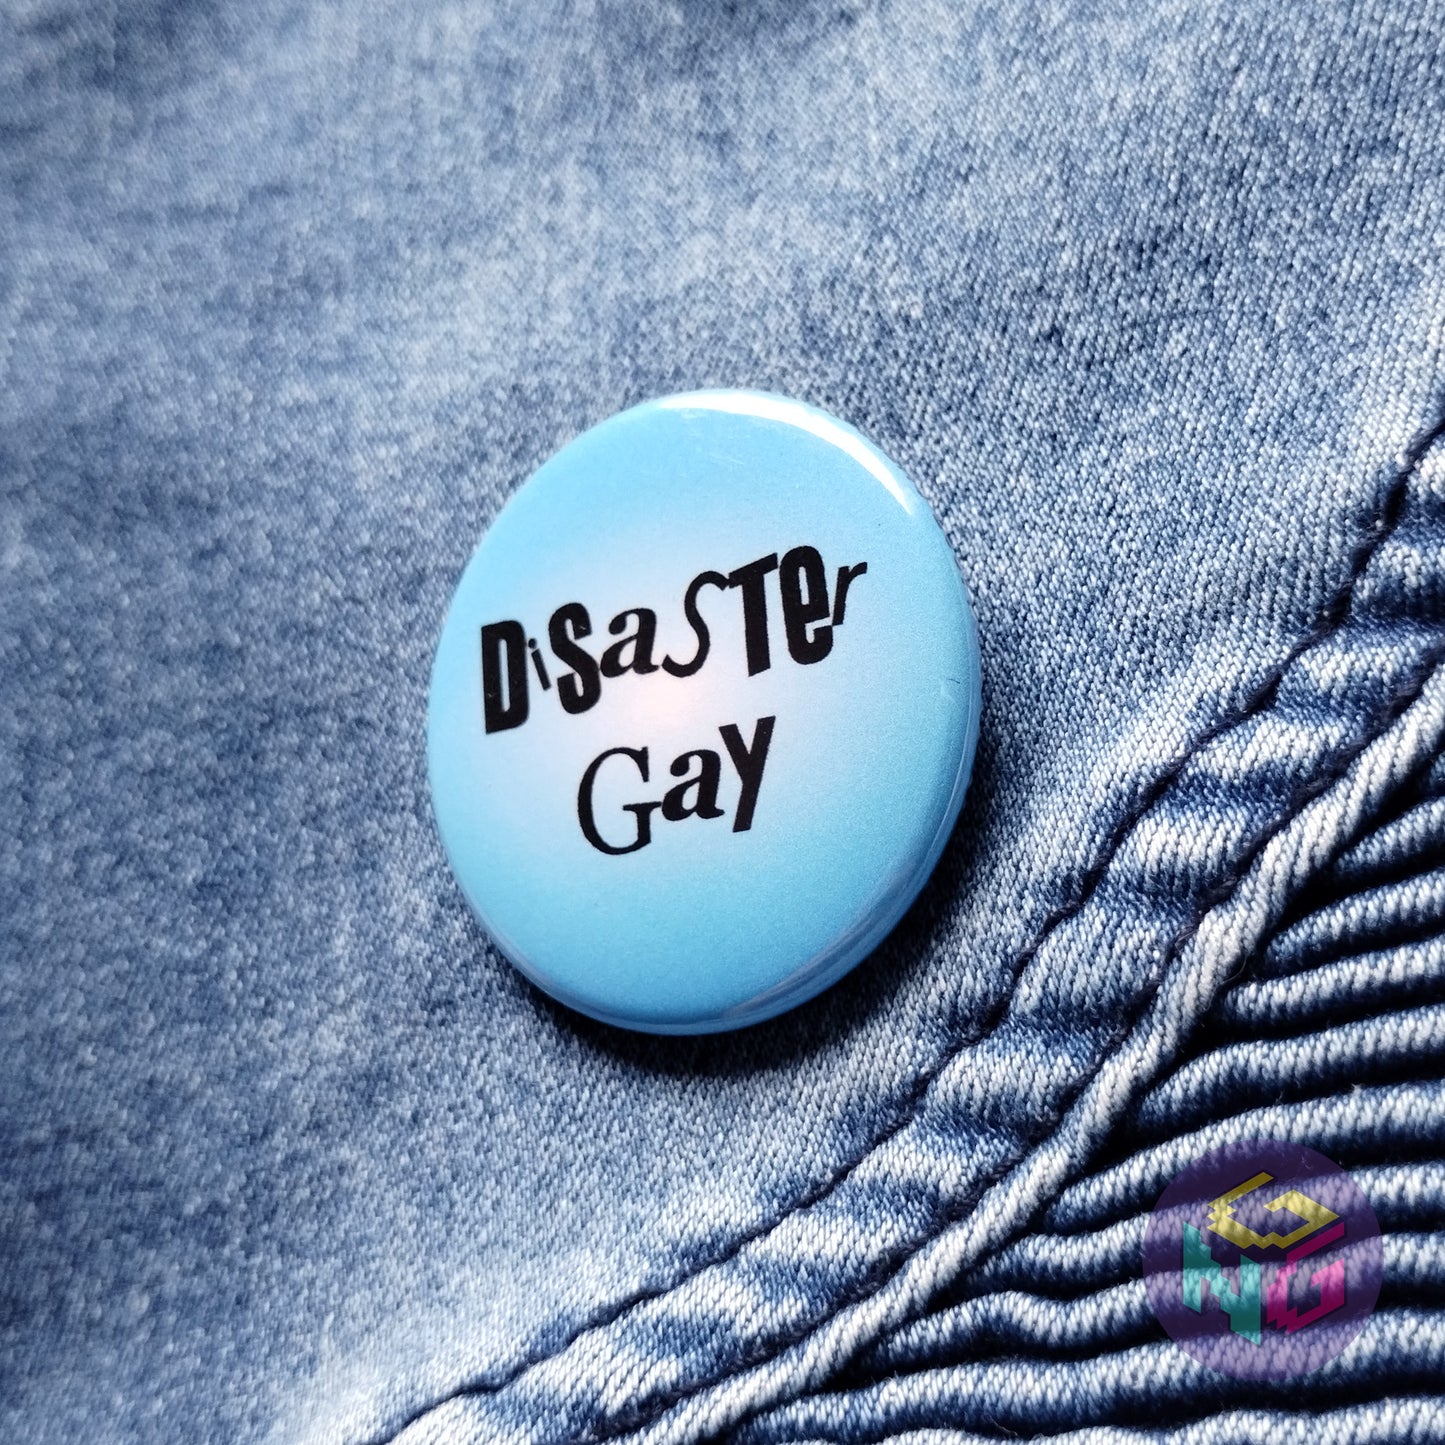 disaster gay pin on denim background